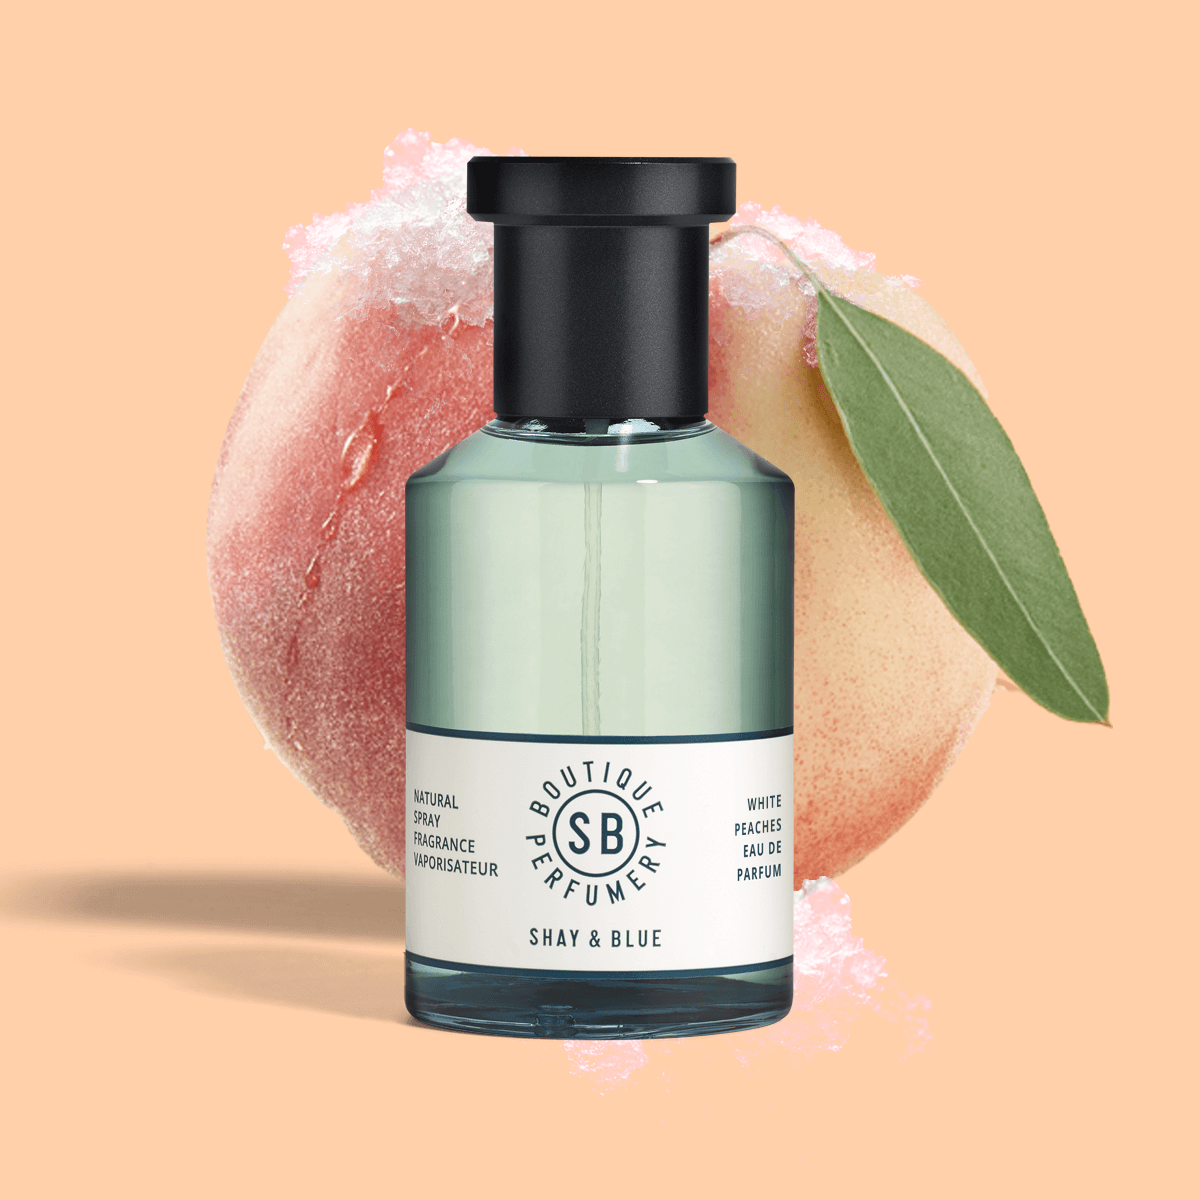 White Peaches Fragrance 100ml | Delicate perzik, vlierbloesemgranita en zilverberk. | Schone geur voor alle seksen | Shay & Blue